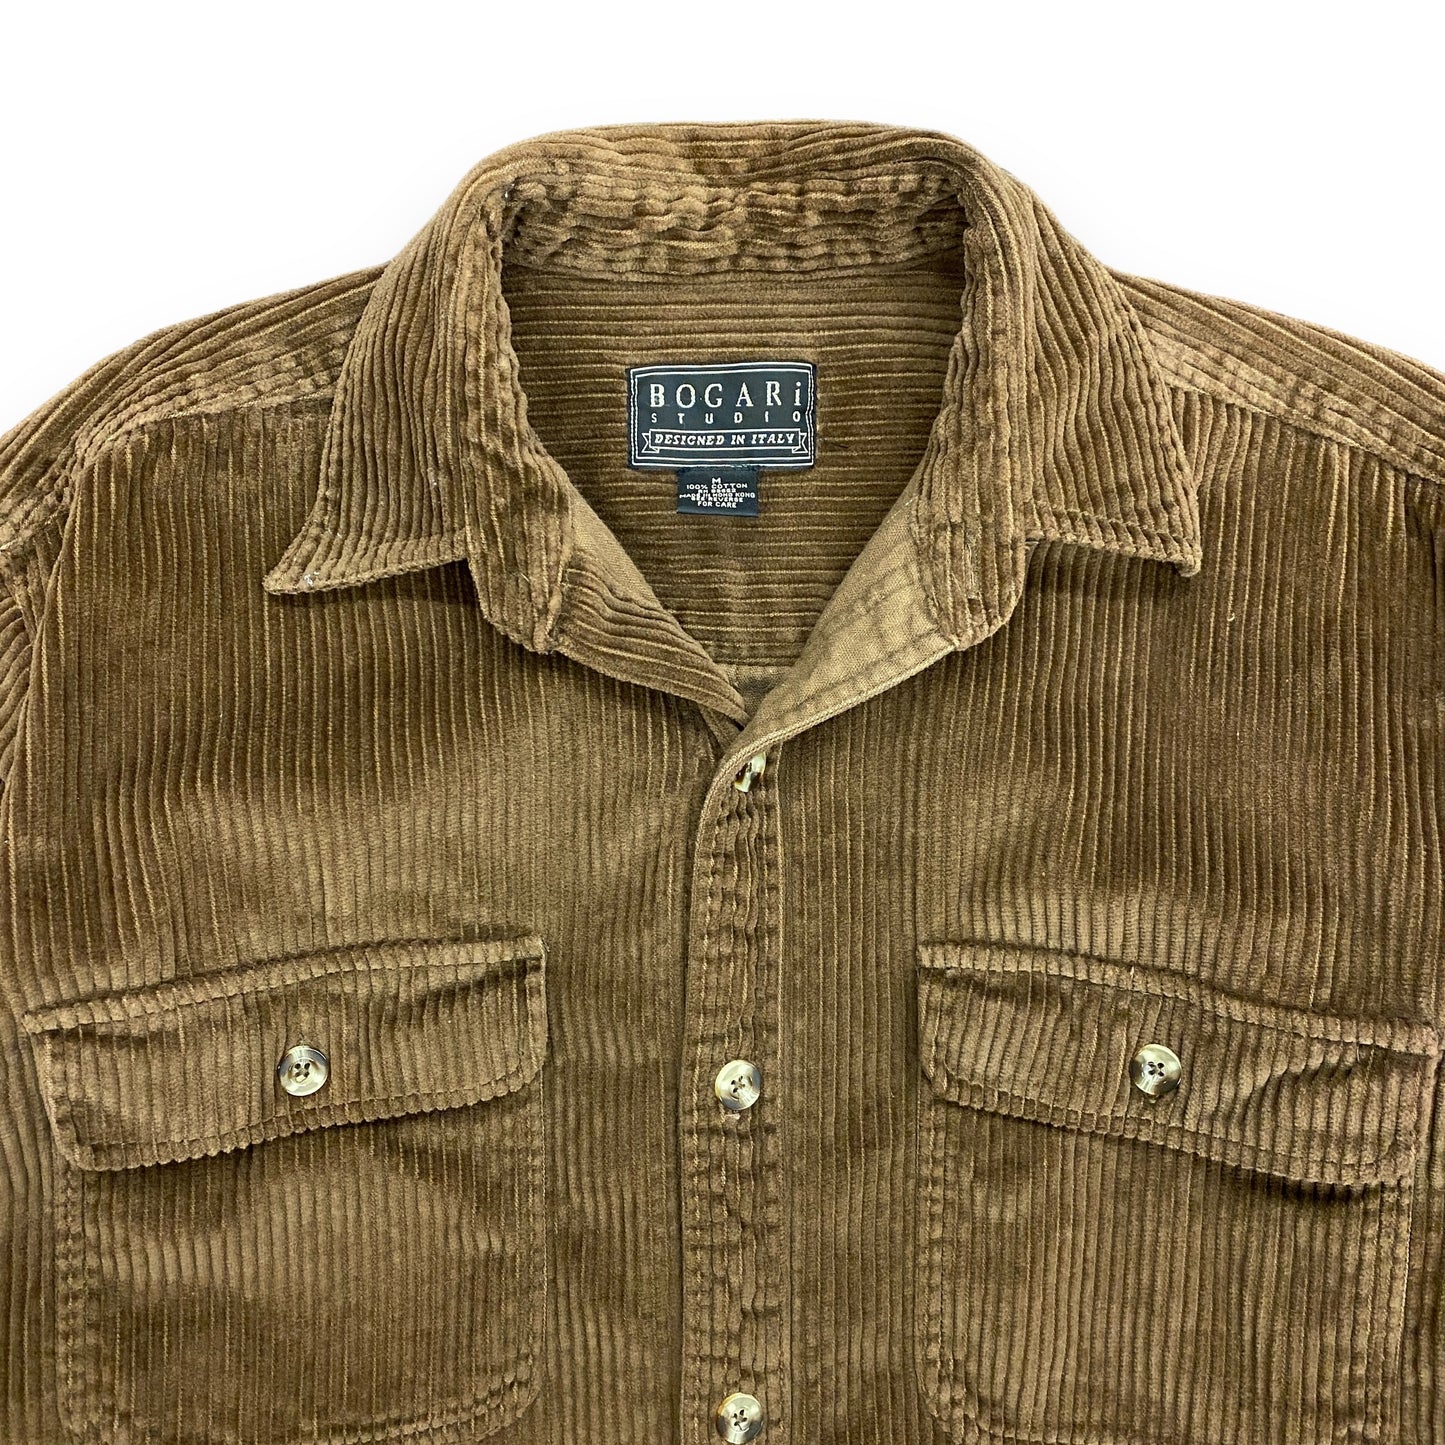 90s Bogari Studio Brown Corduroy Heavyweight Button Up Shirt - Size Medium